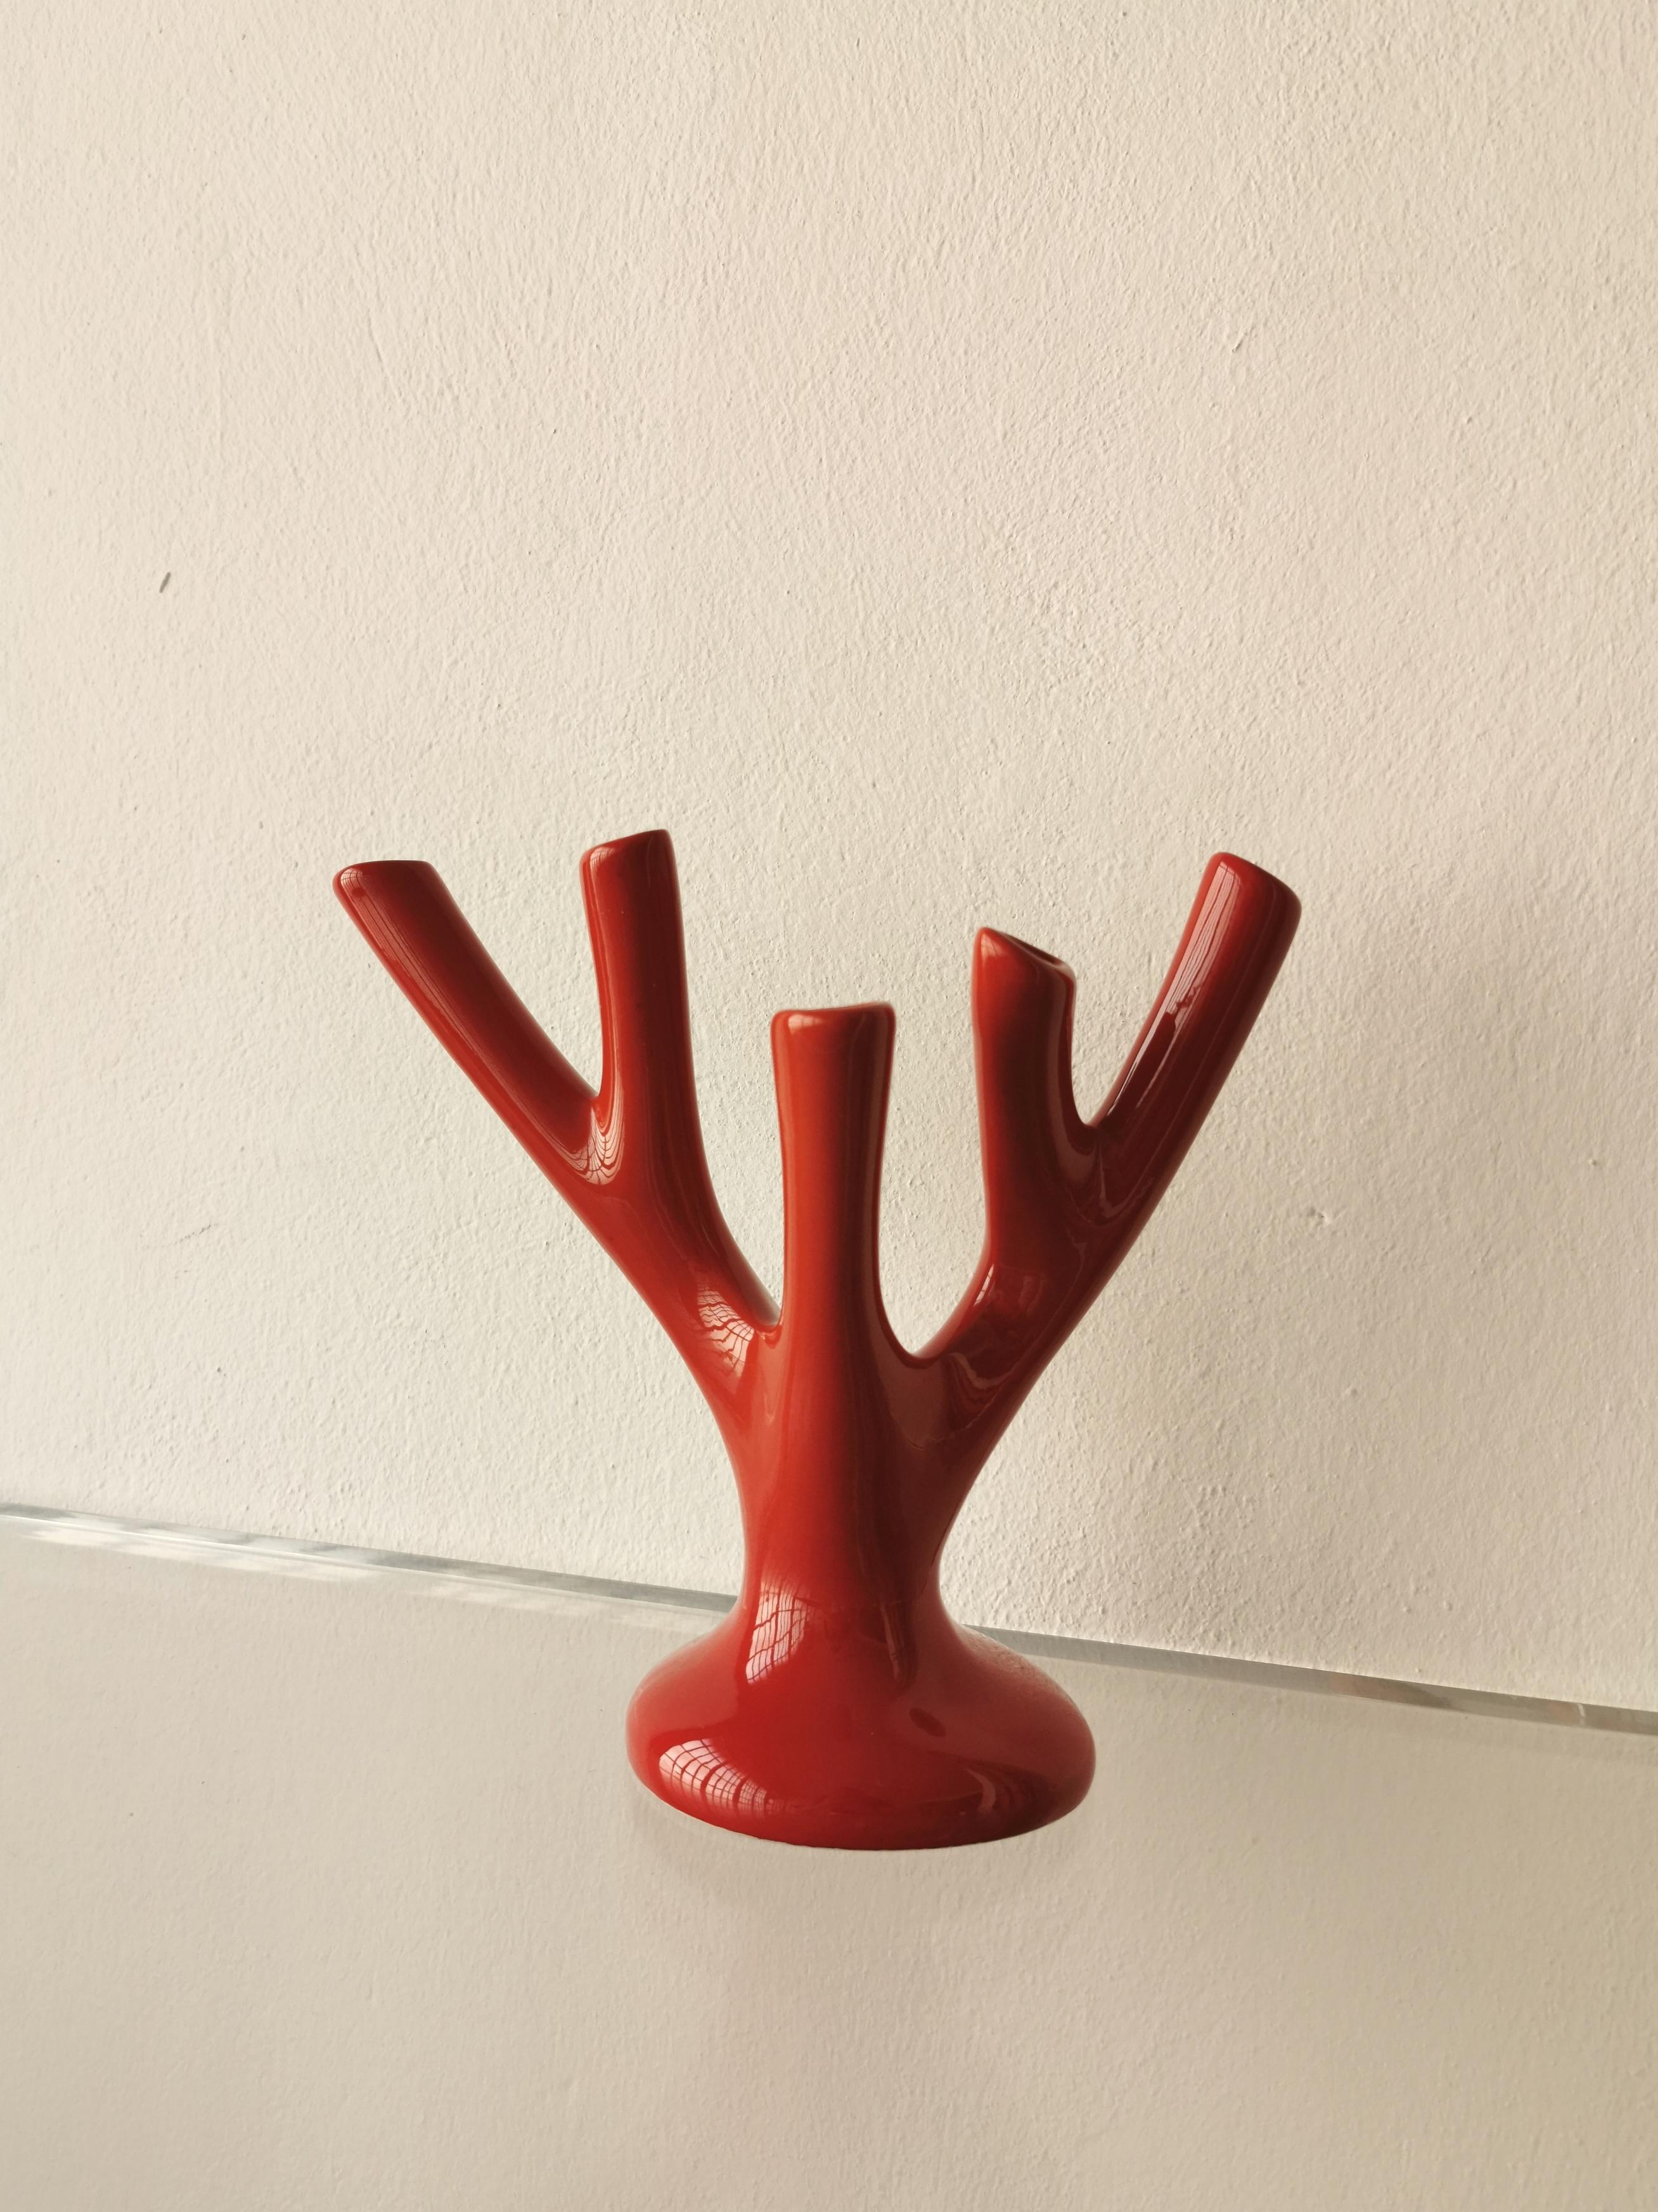 Enameled Vase Sculpture Red Ceramic Coral Flower Holder Midcentury Italian Design, 1970s